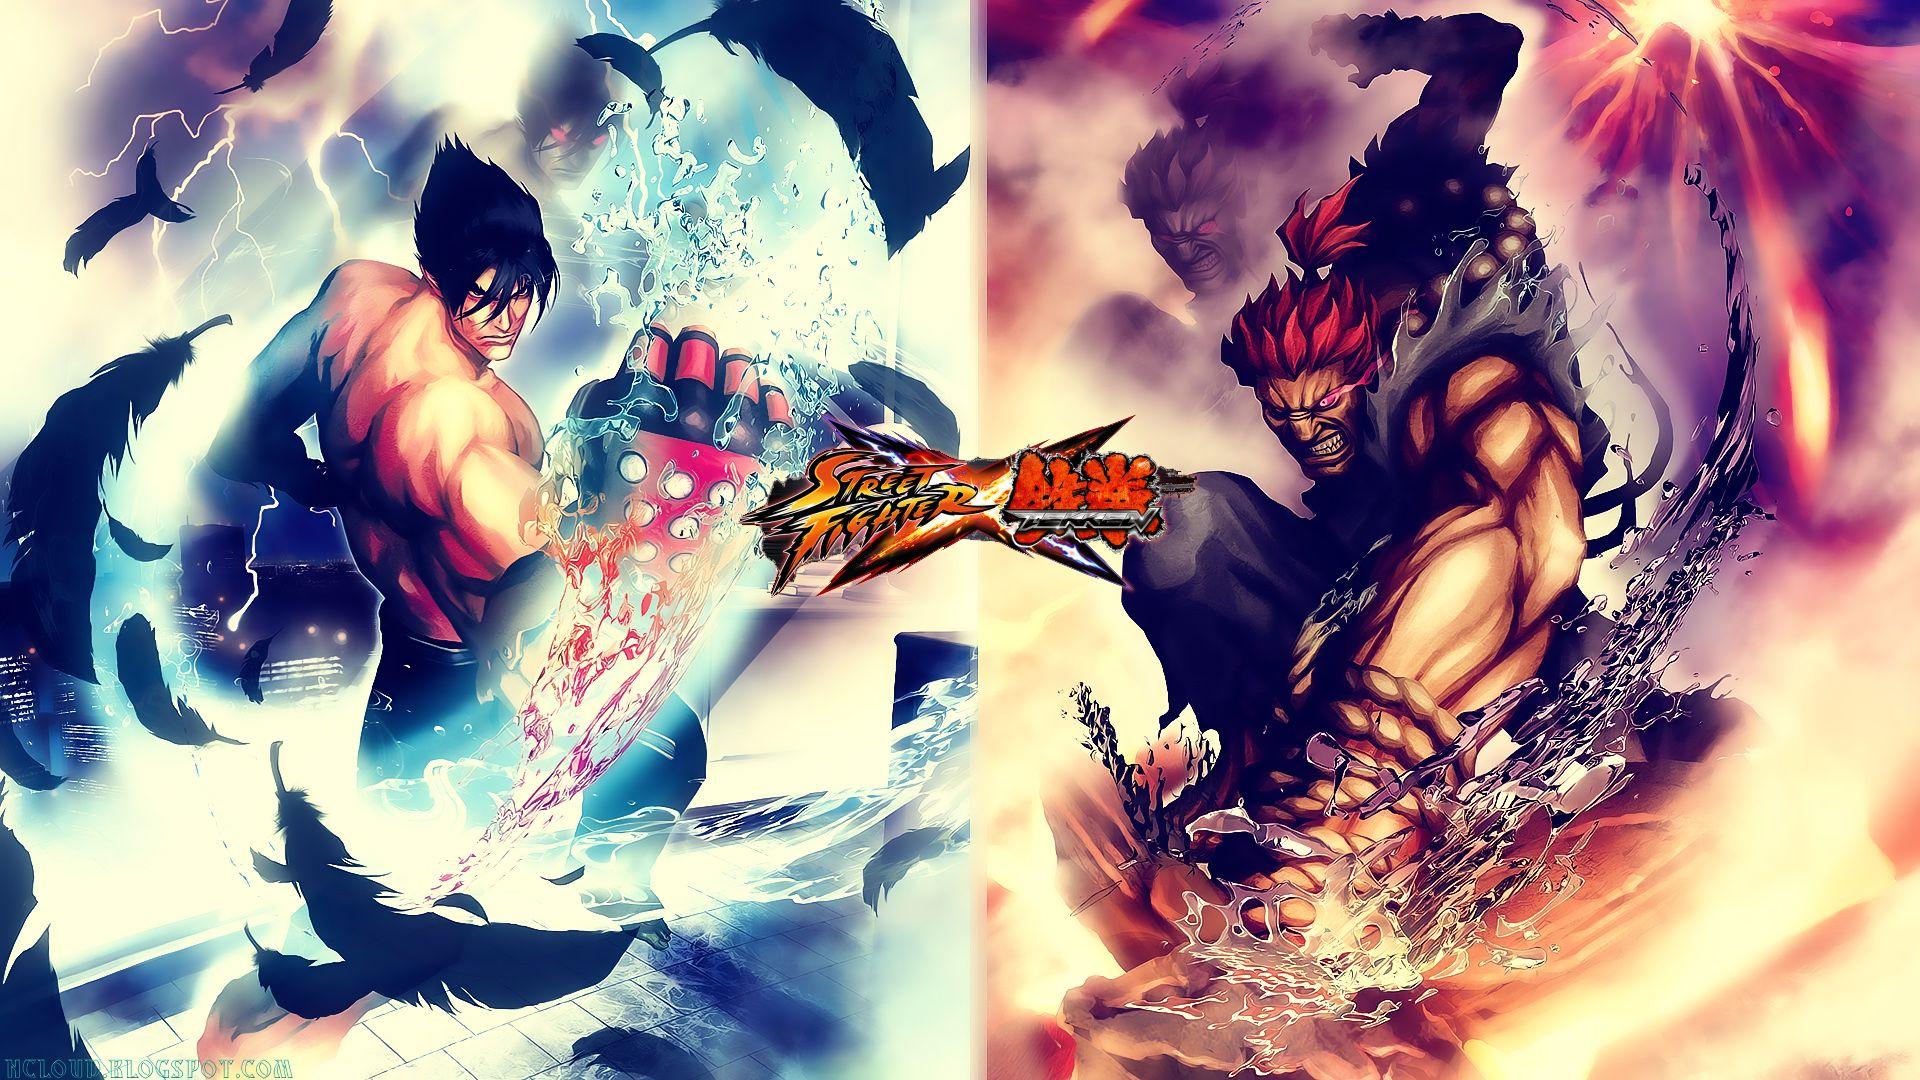 Games Movies Music Anime: My Street Fighter X Tekken Jin, Akuma